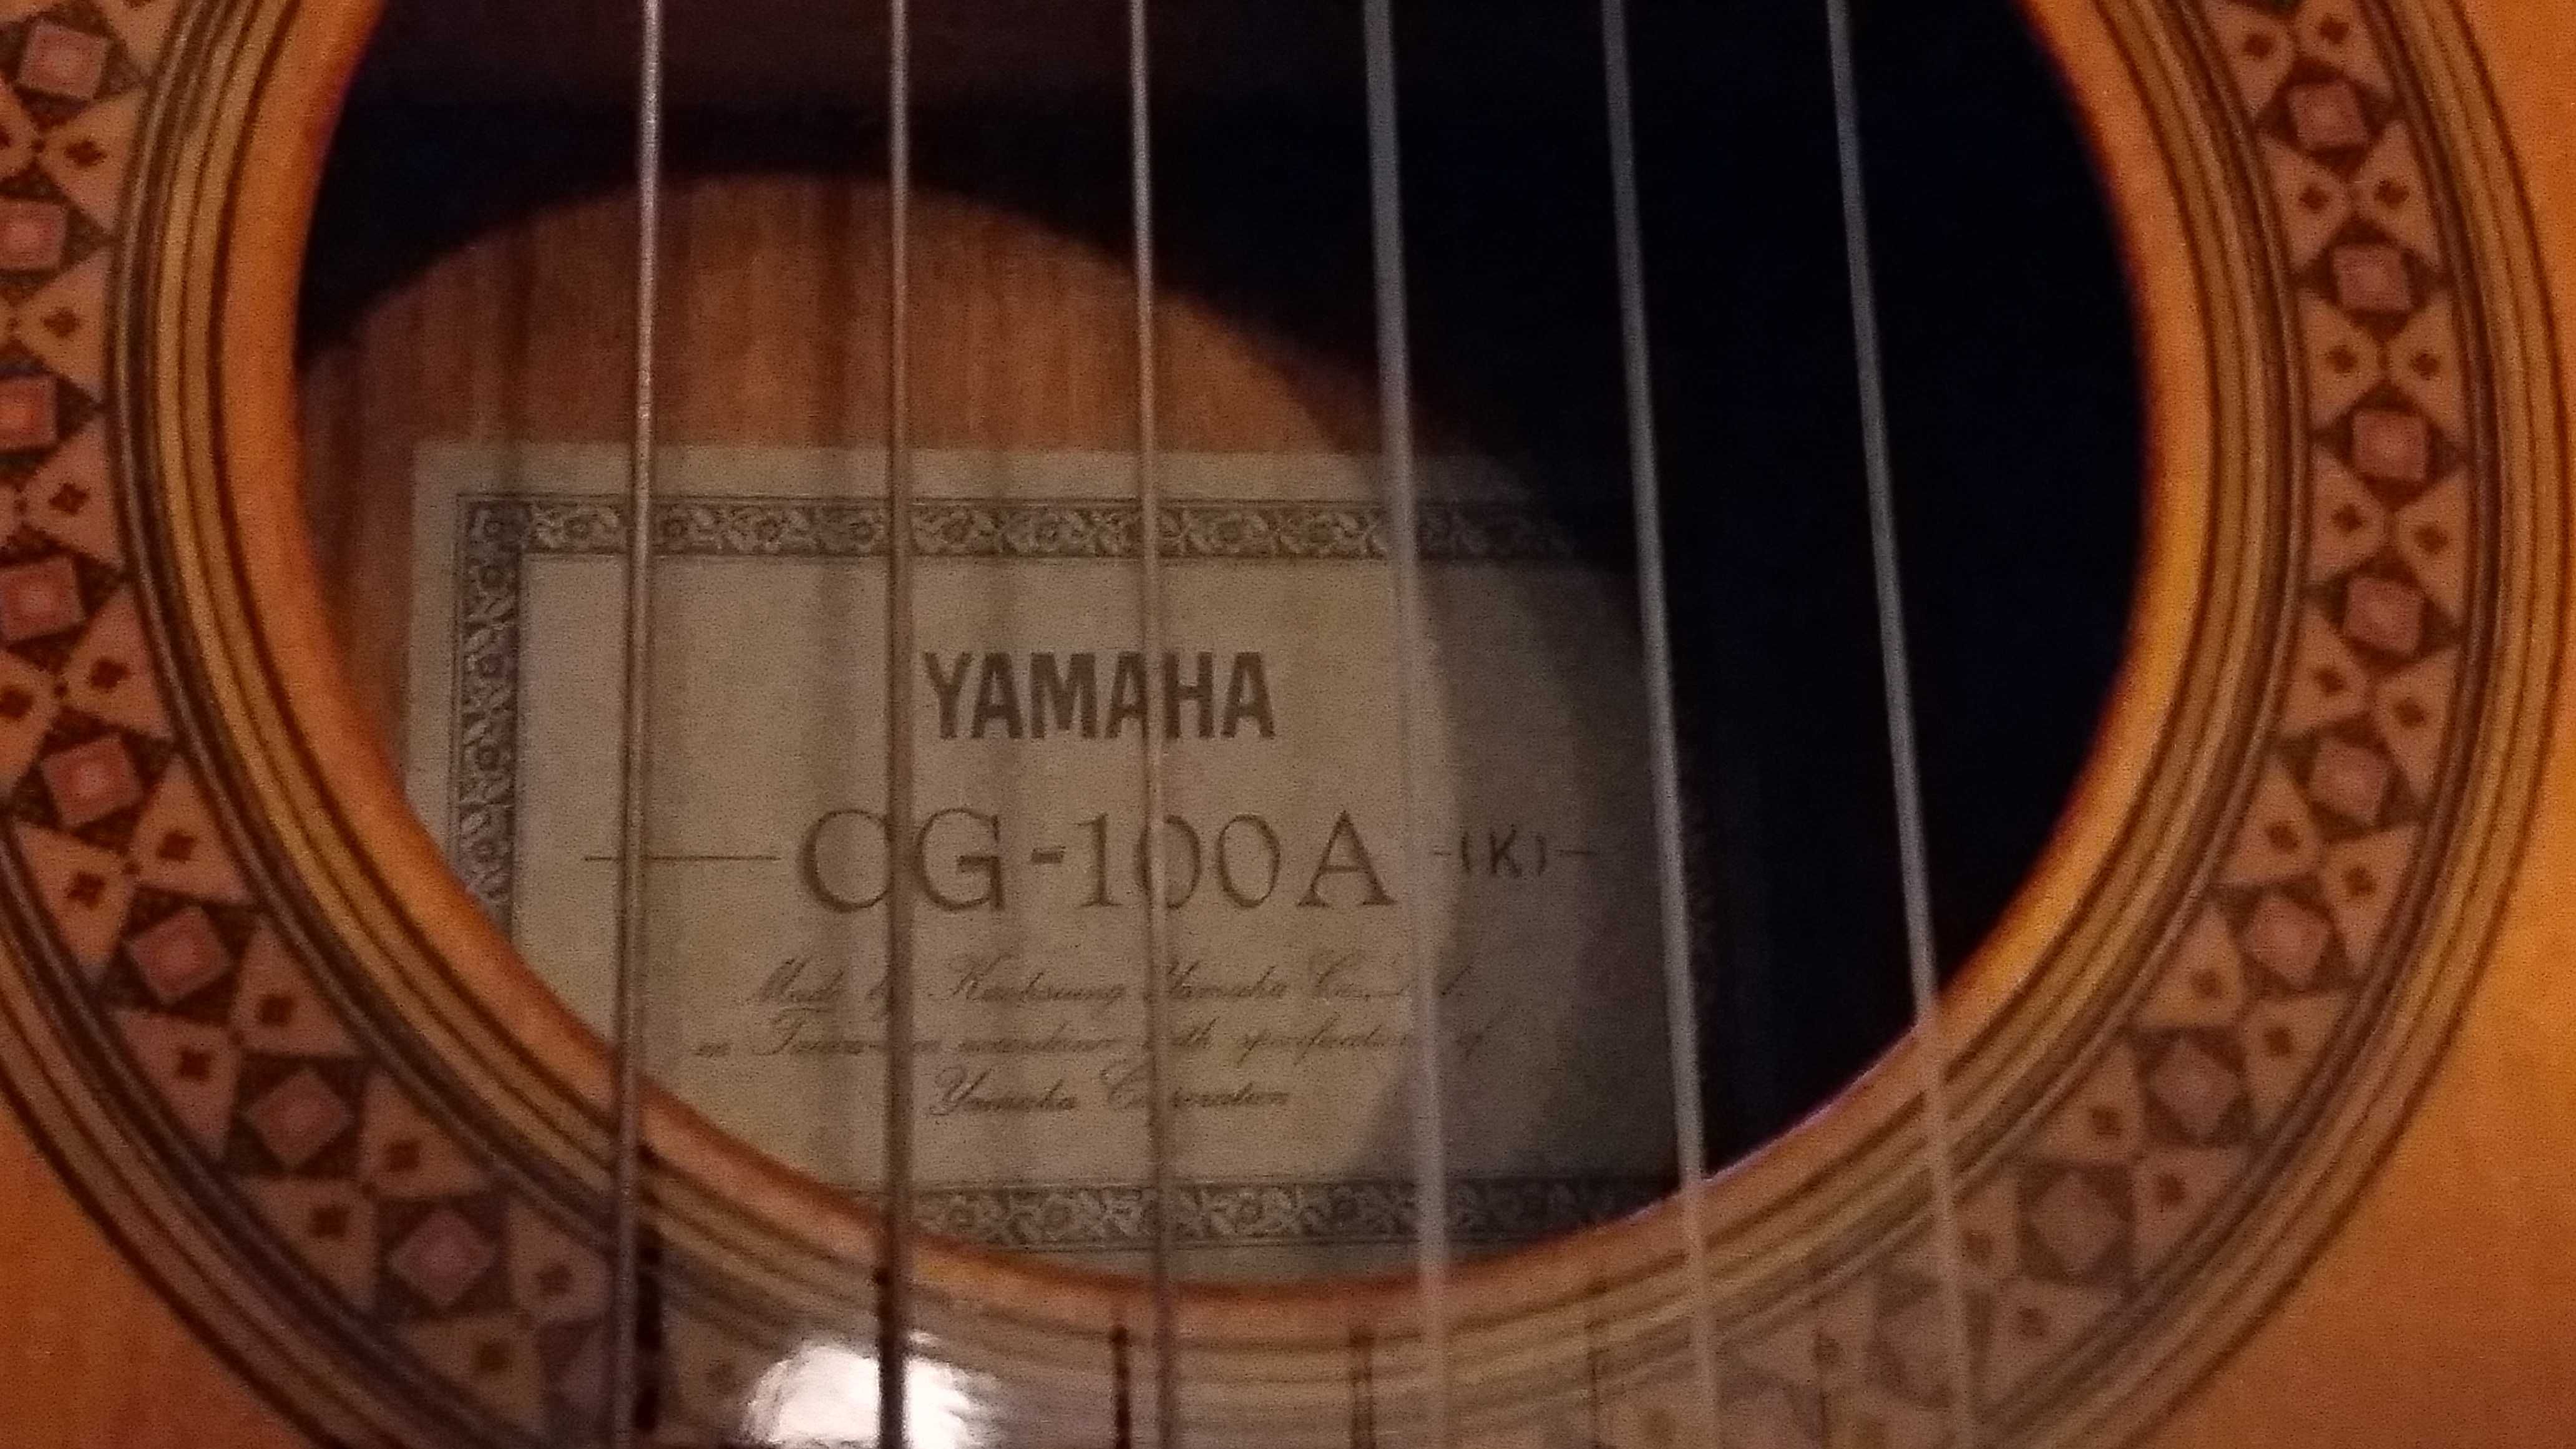 Yamaha CG-100A  gitara klasyczna Z LAT 90*  #